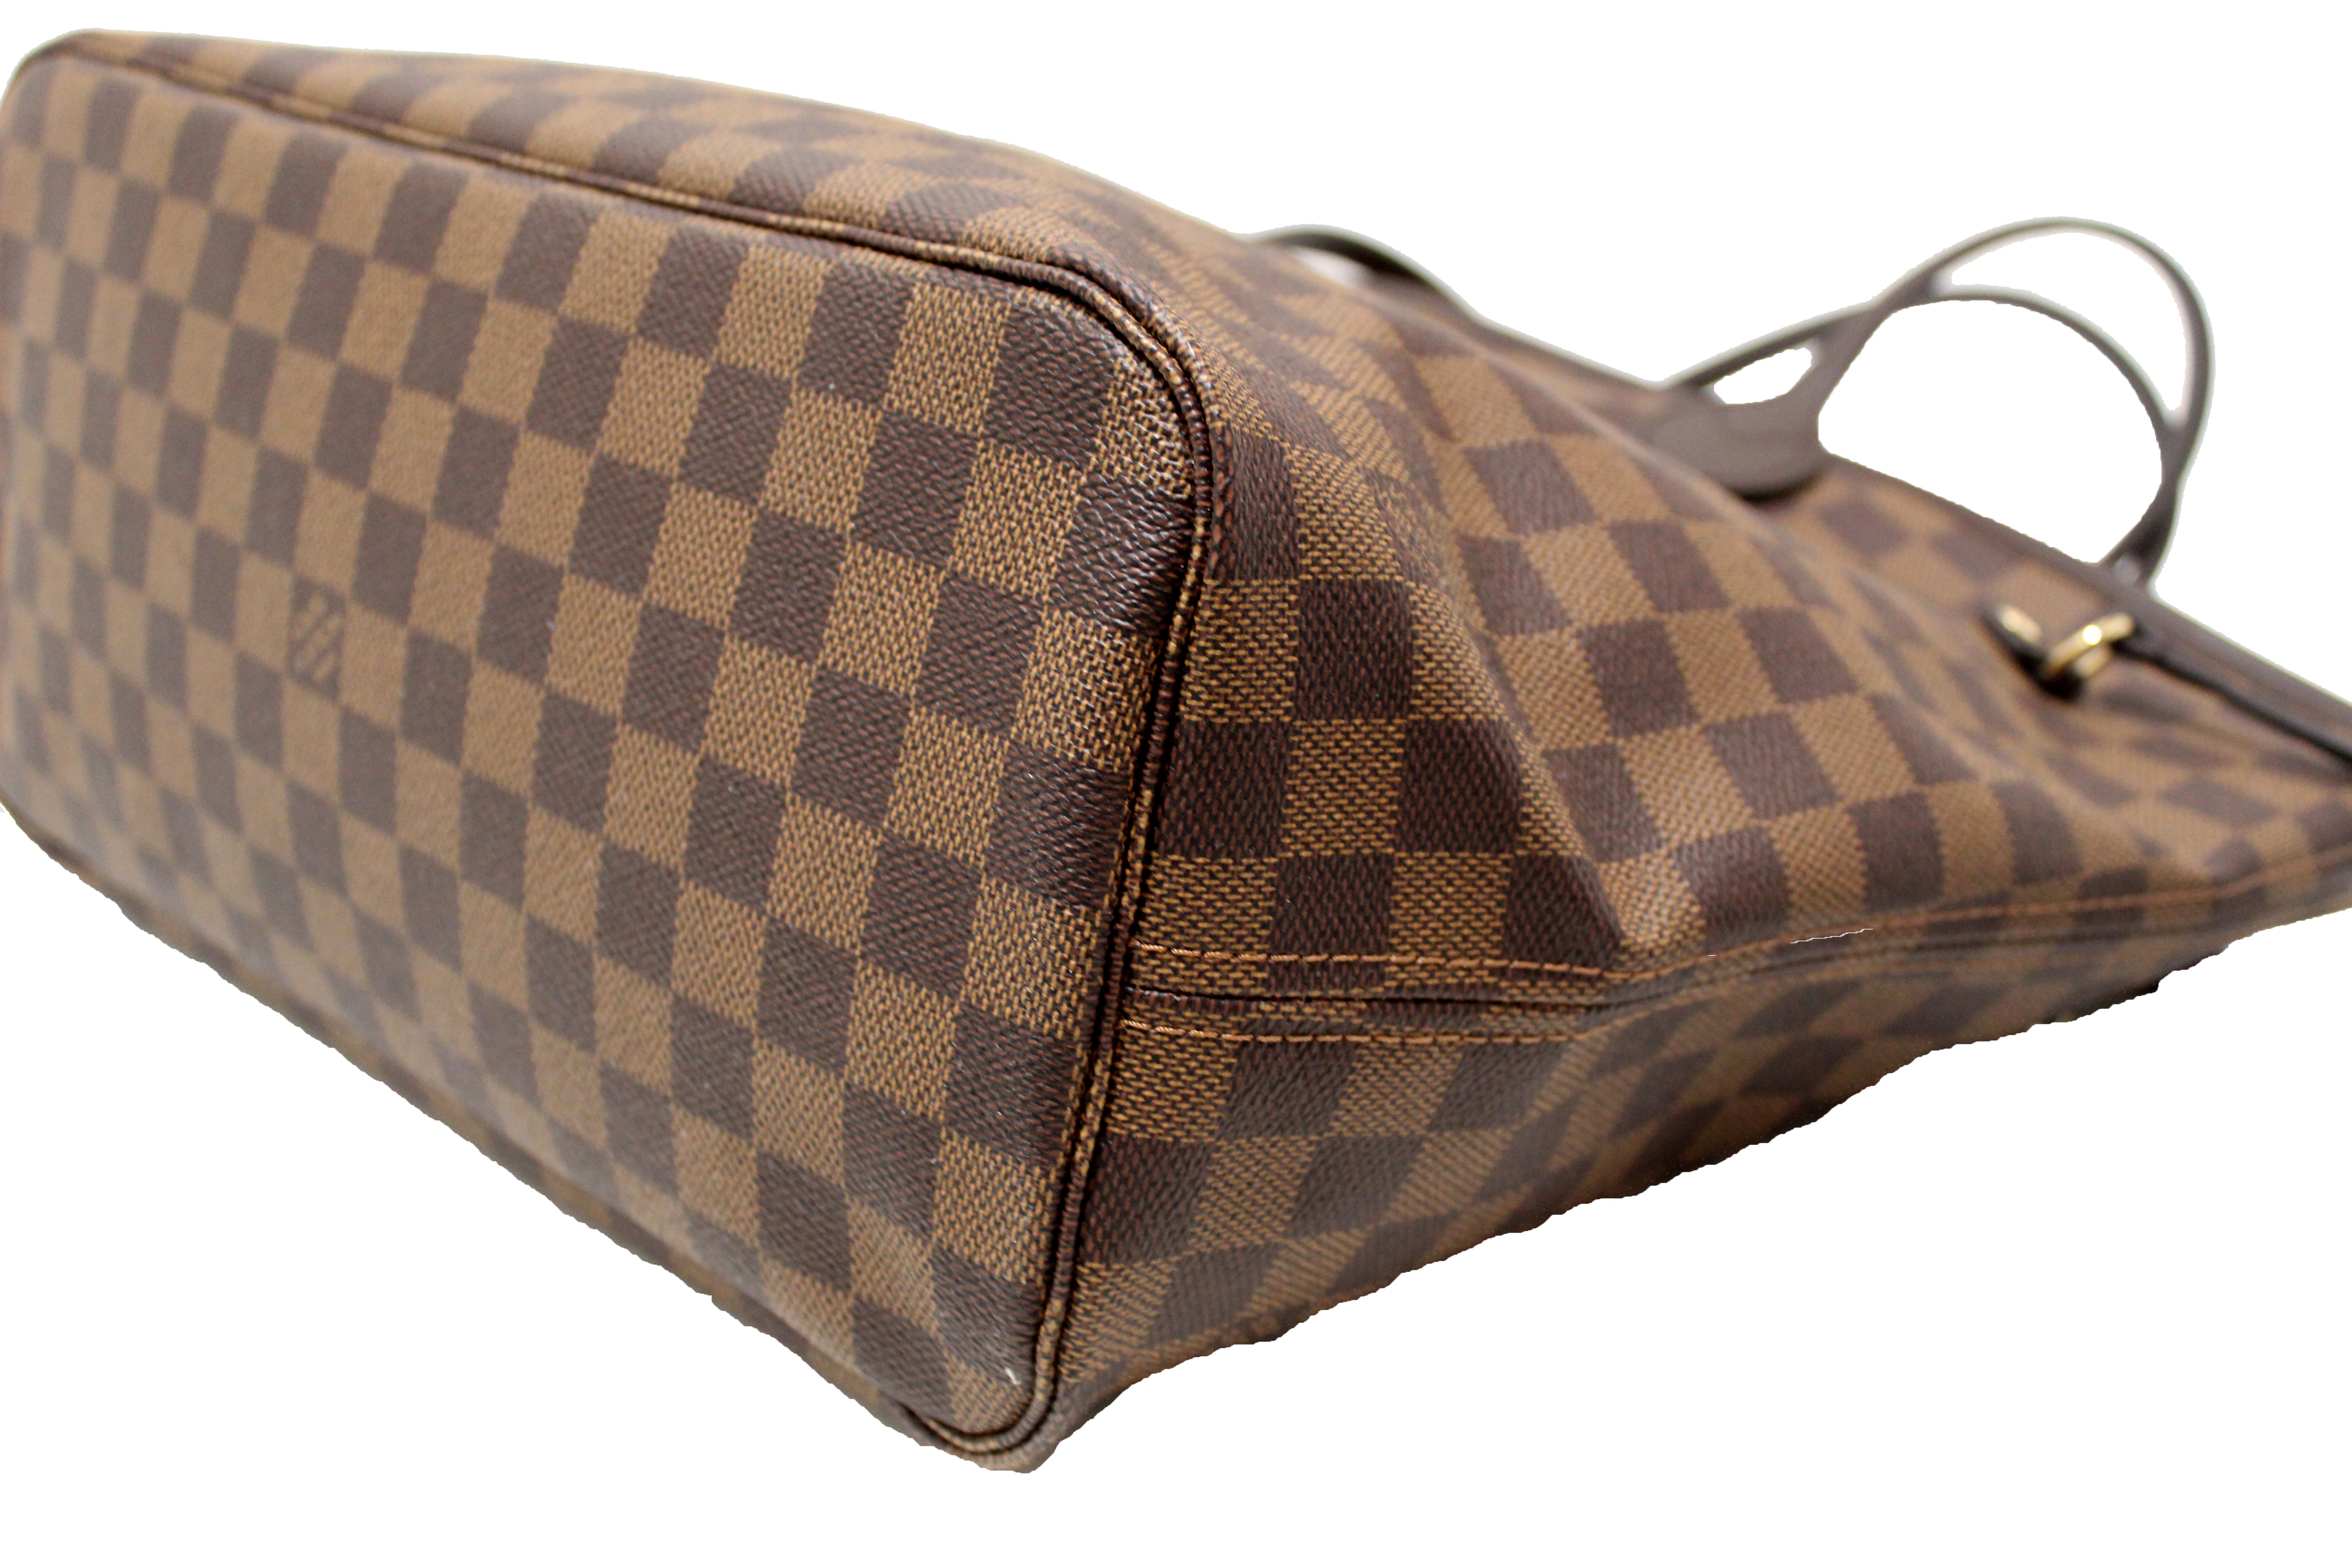 Authentic NEW Louis Vuitton Damier Ebene Canvas Neverfull MM Tote Shoulder Bag